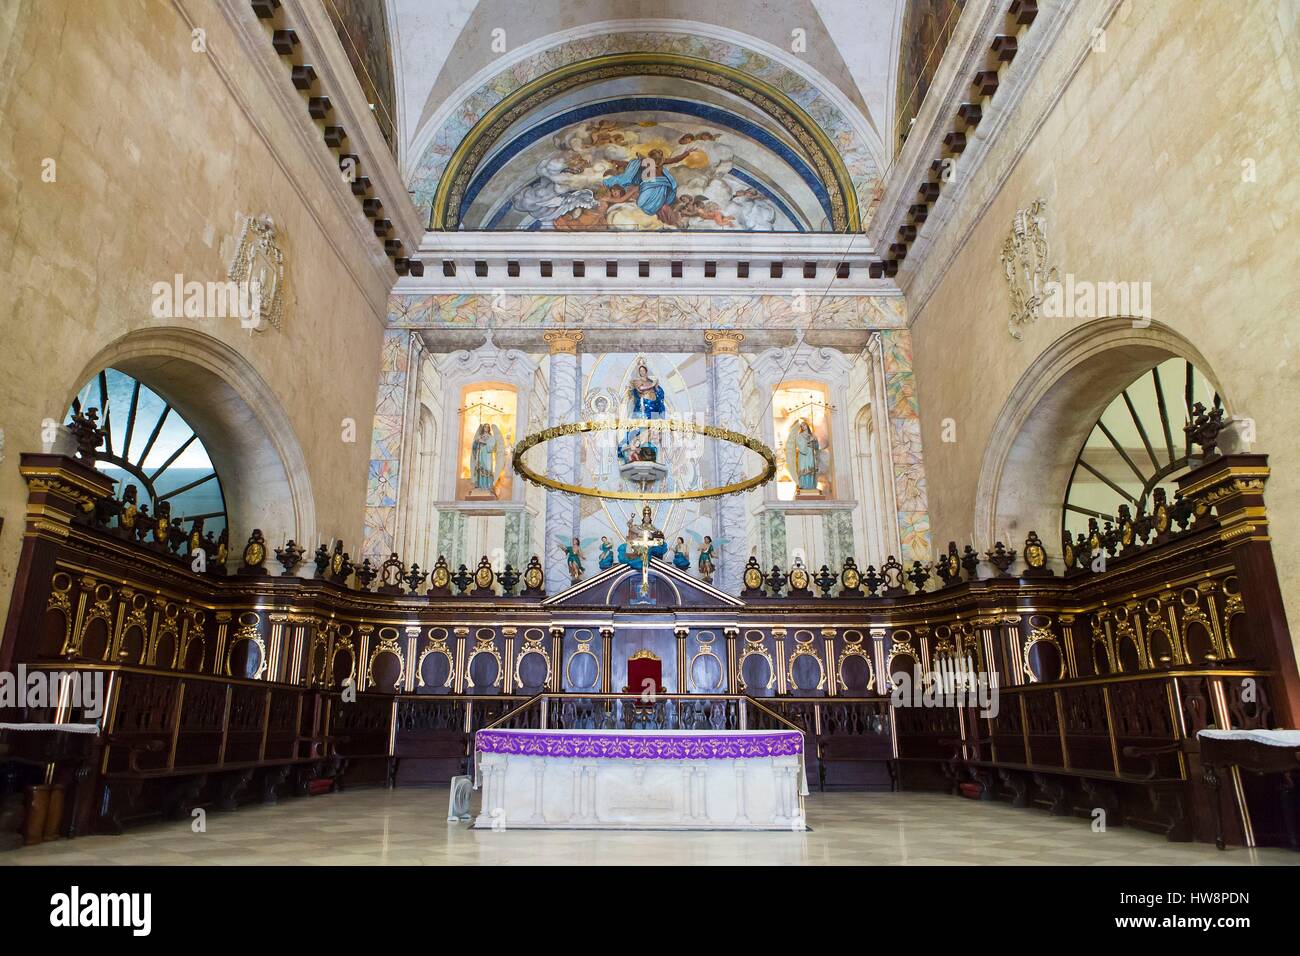 Cuba, Ciudad de la Habana Province, La Havane, La Habana Vieja ville inscrite au Patrimoine Mondial de l'UNESCO, intérieur de la Virgen Maria de la Immaculada Conception Cathedral Banque D'Images